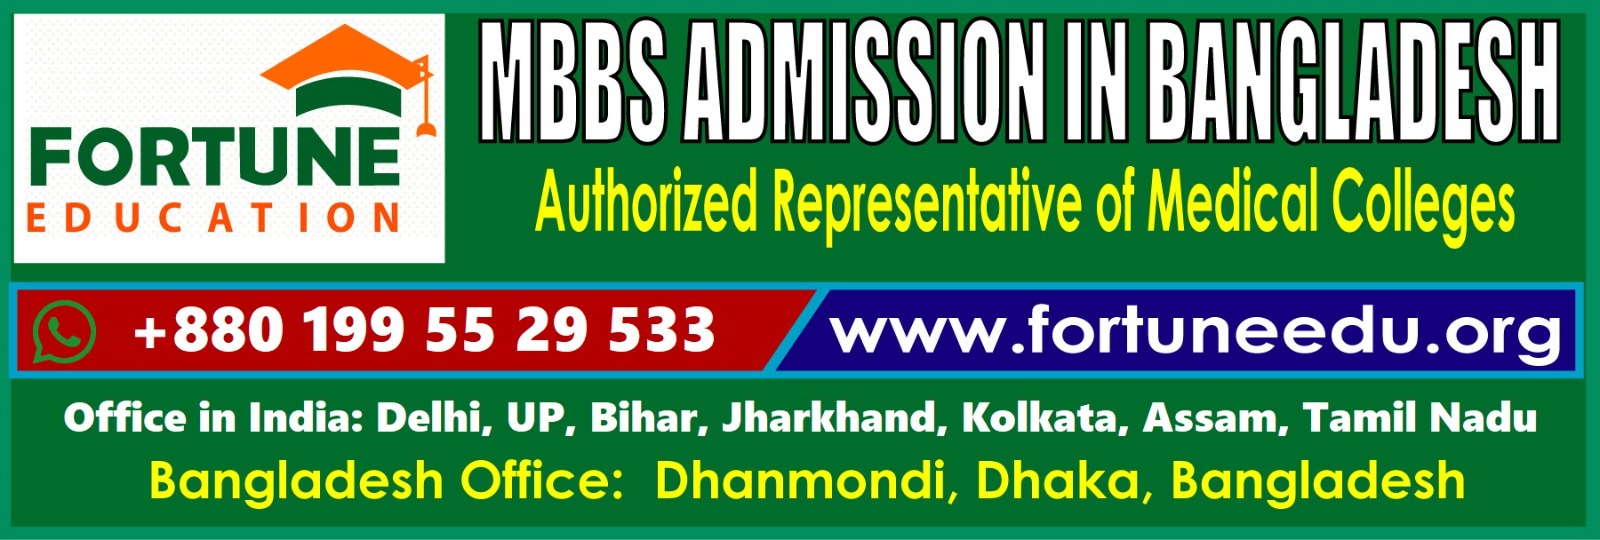 MBBS Admission Procedure in Bangladesh